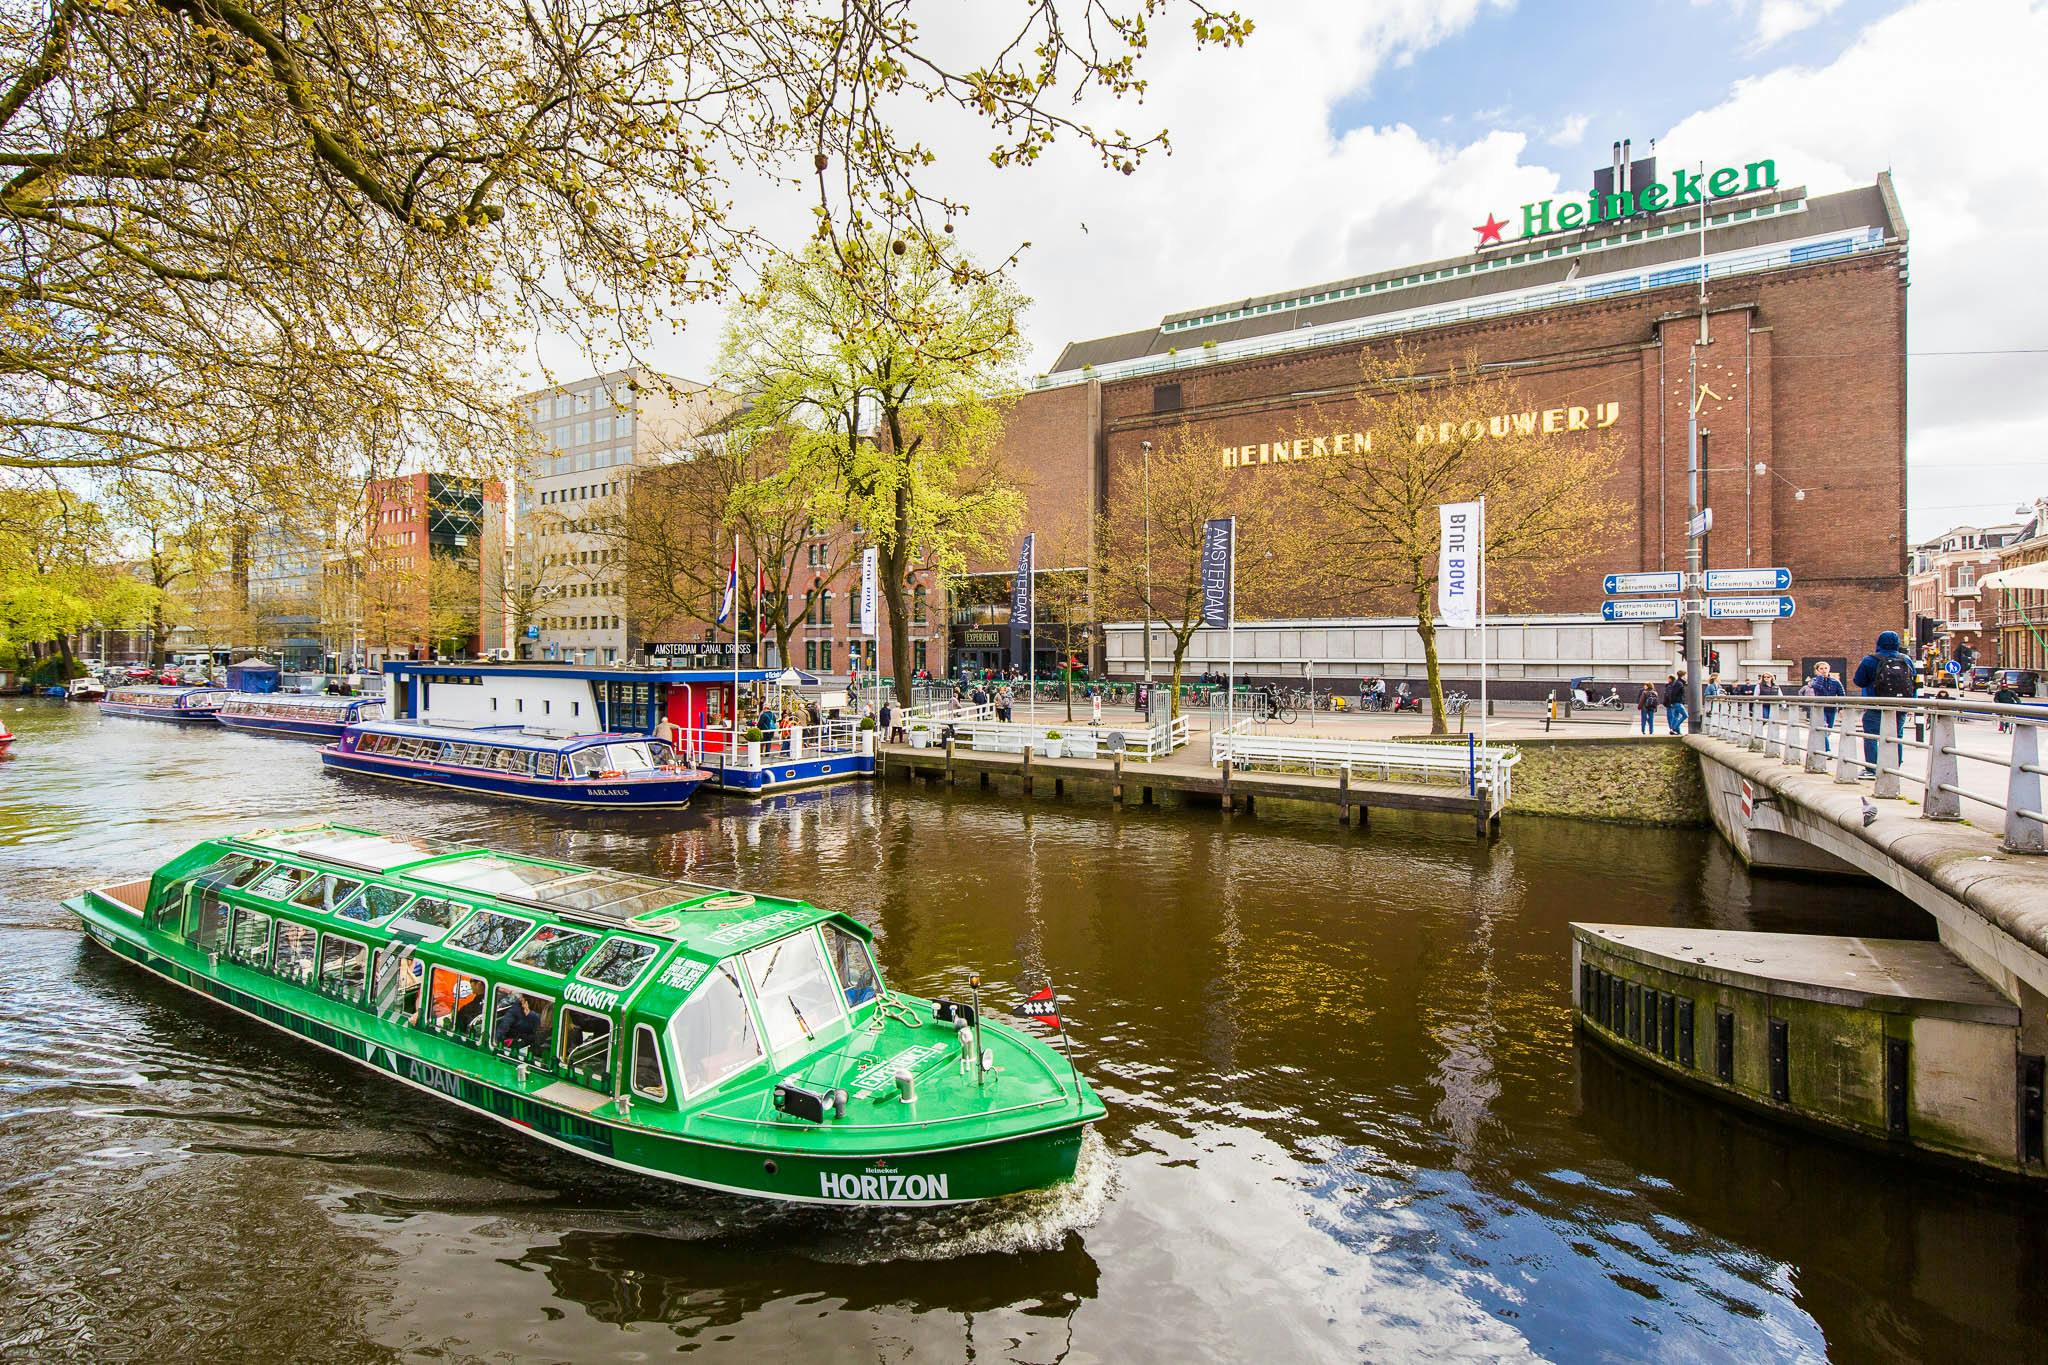 Heineken and canal cruise